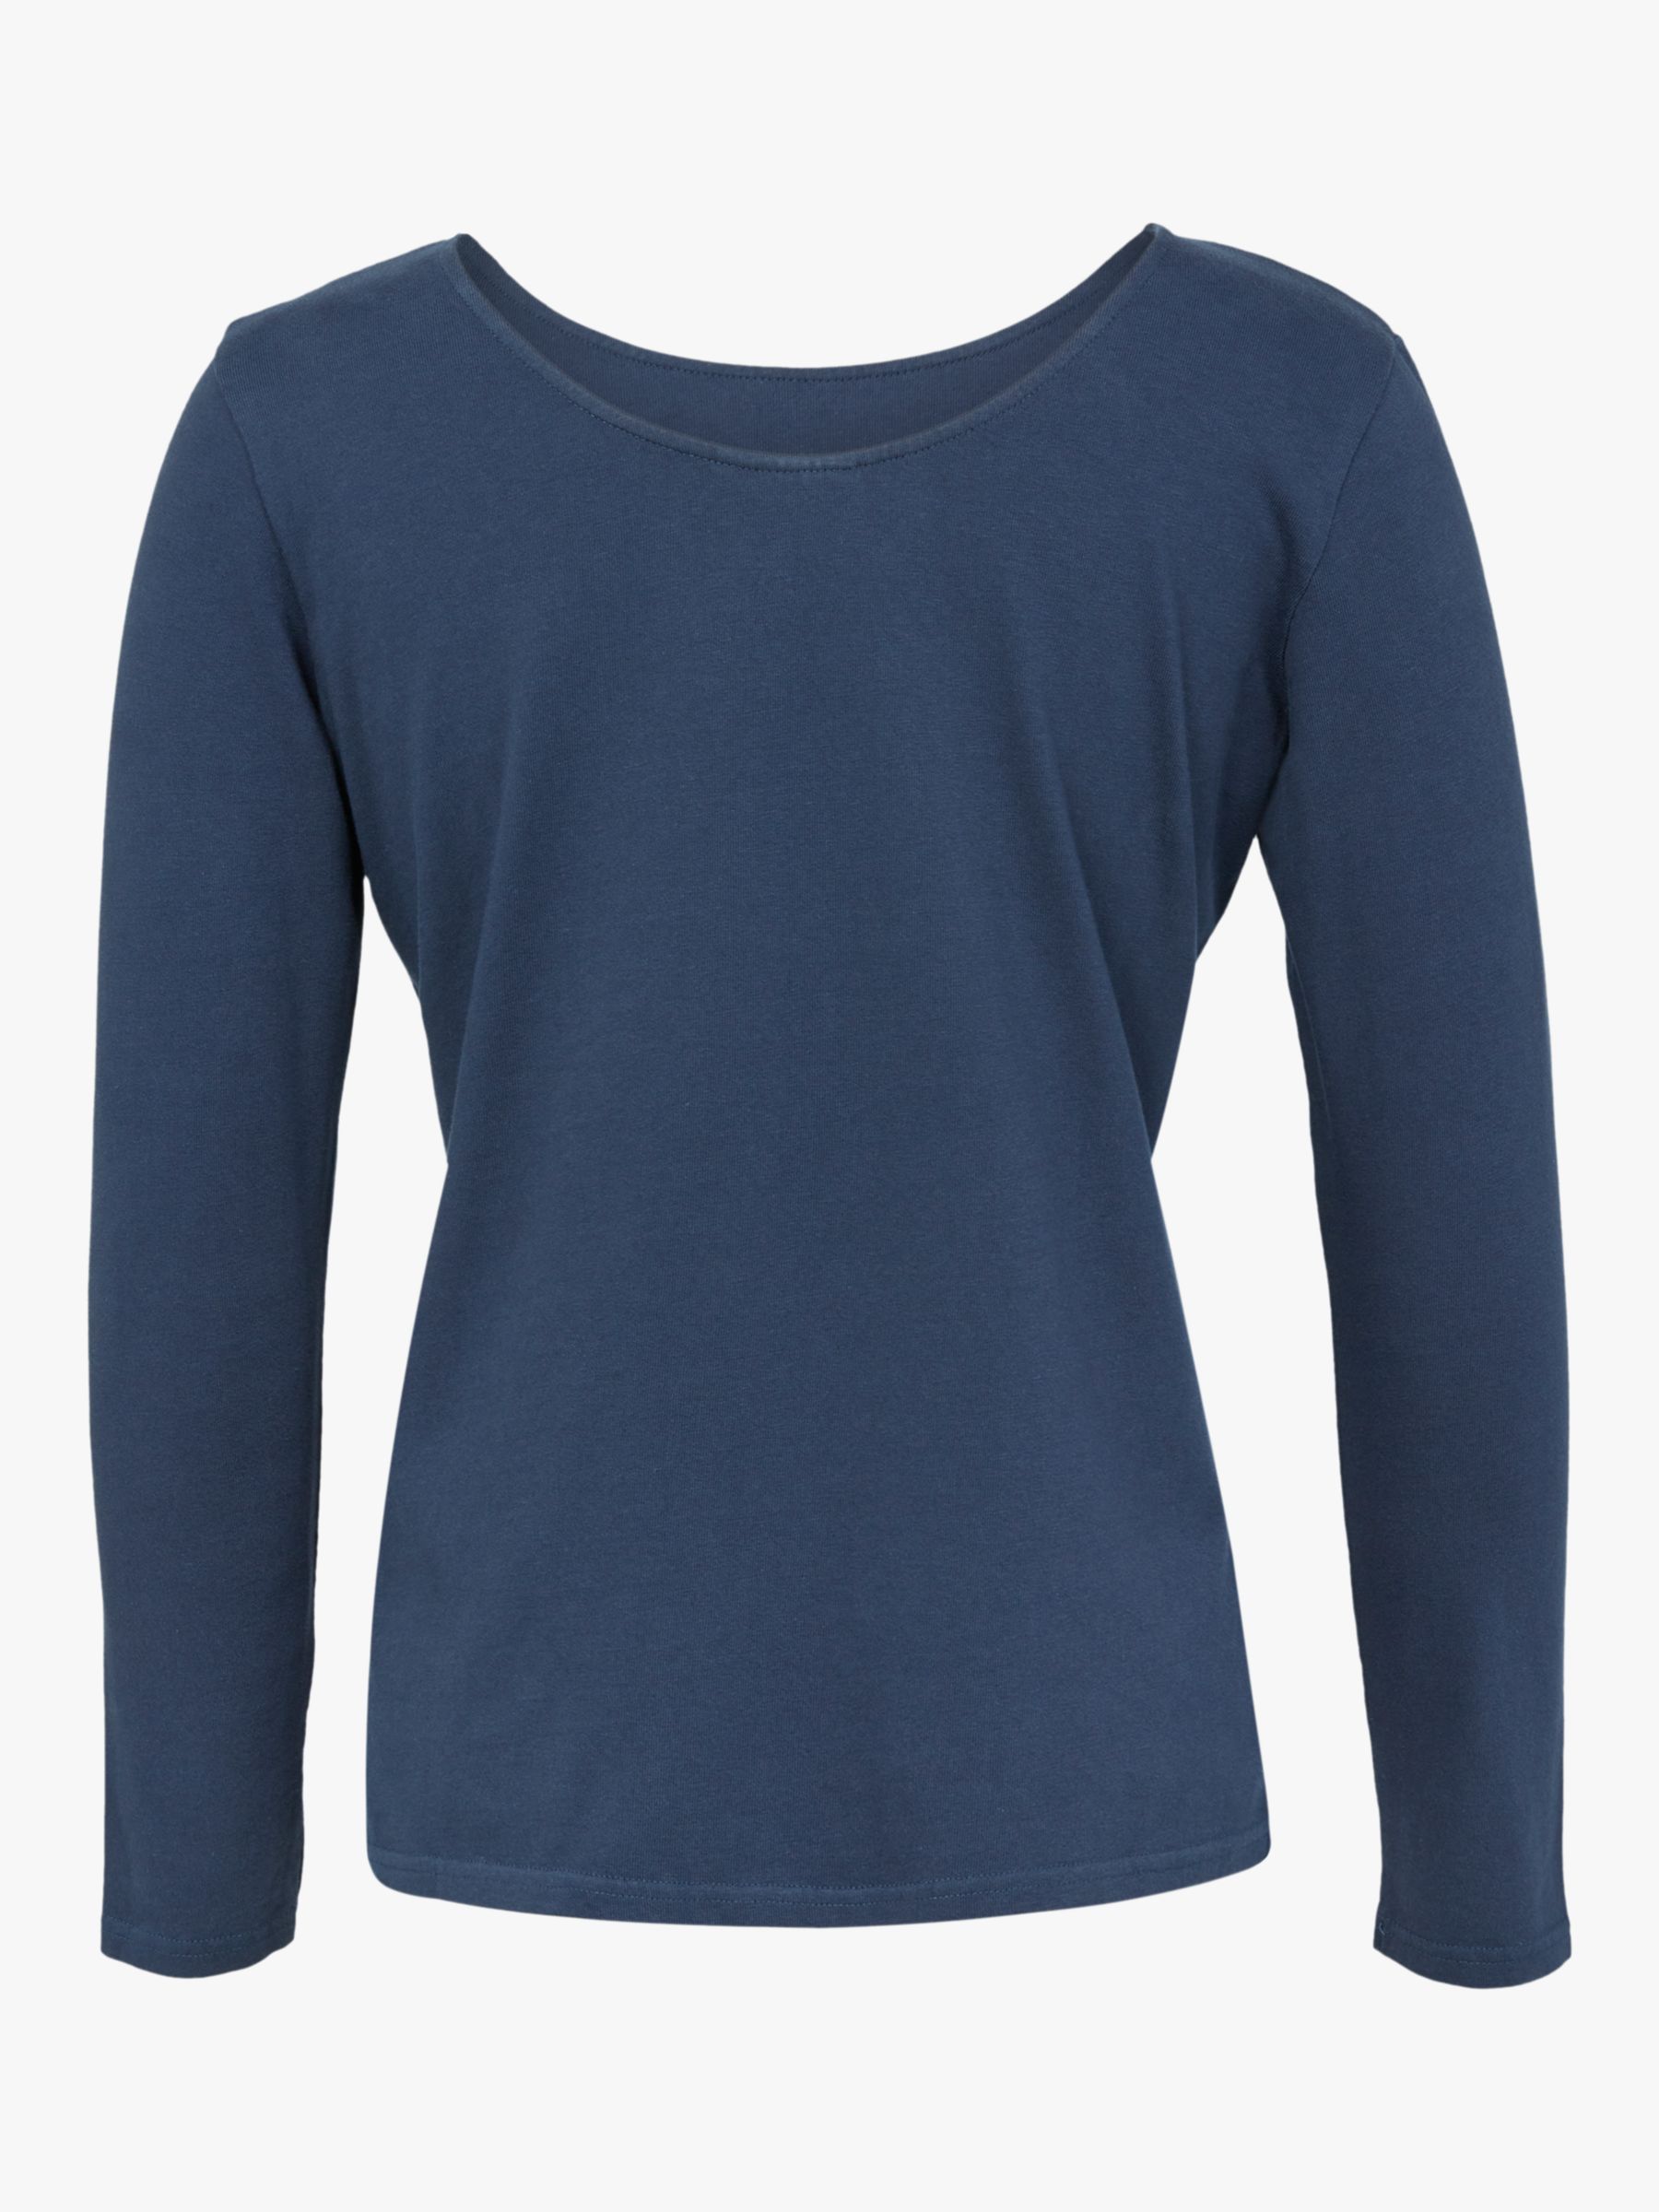 Buy Celtic & Co. Organic Cotton Scoop Neck T-Shirt, Dark Navy Online at johnlewis.com